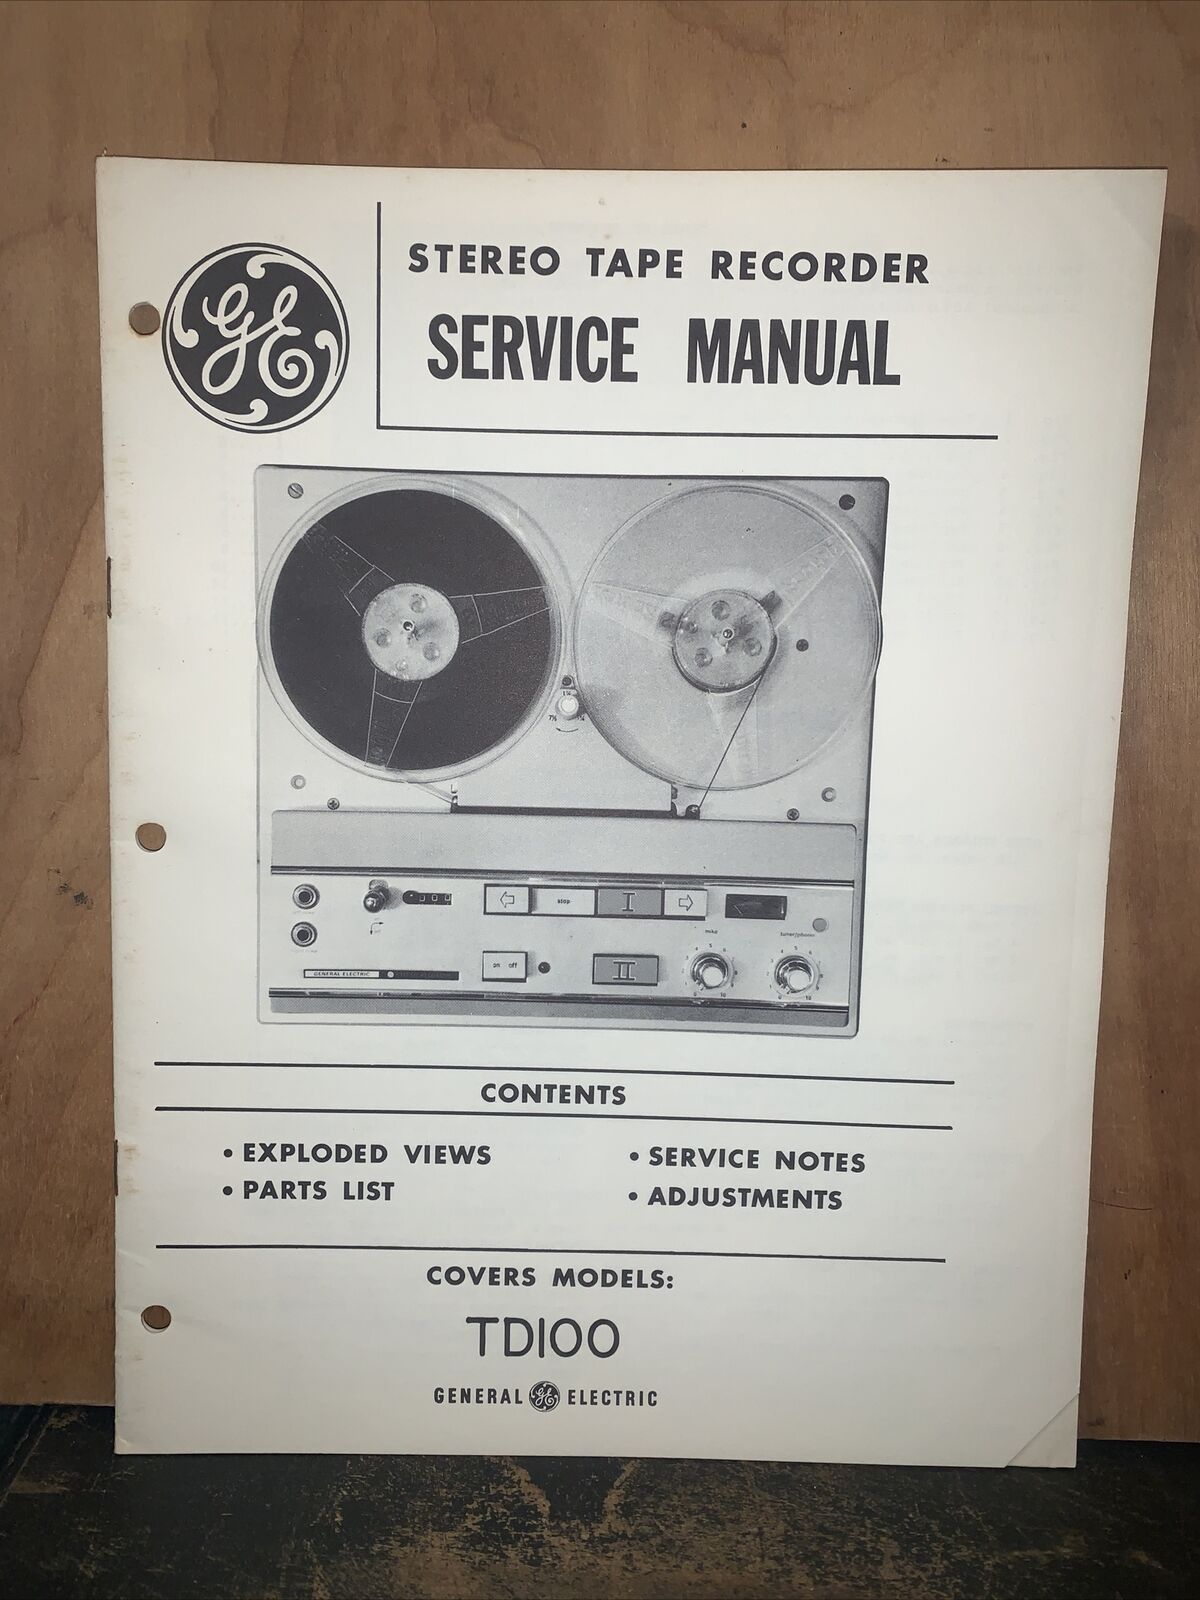 General Electric Tape recorder TD100 -Service Manual- Schematics, Parts List.